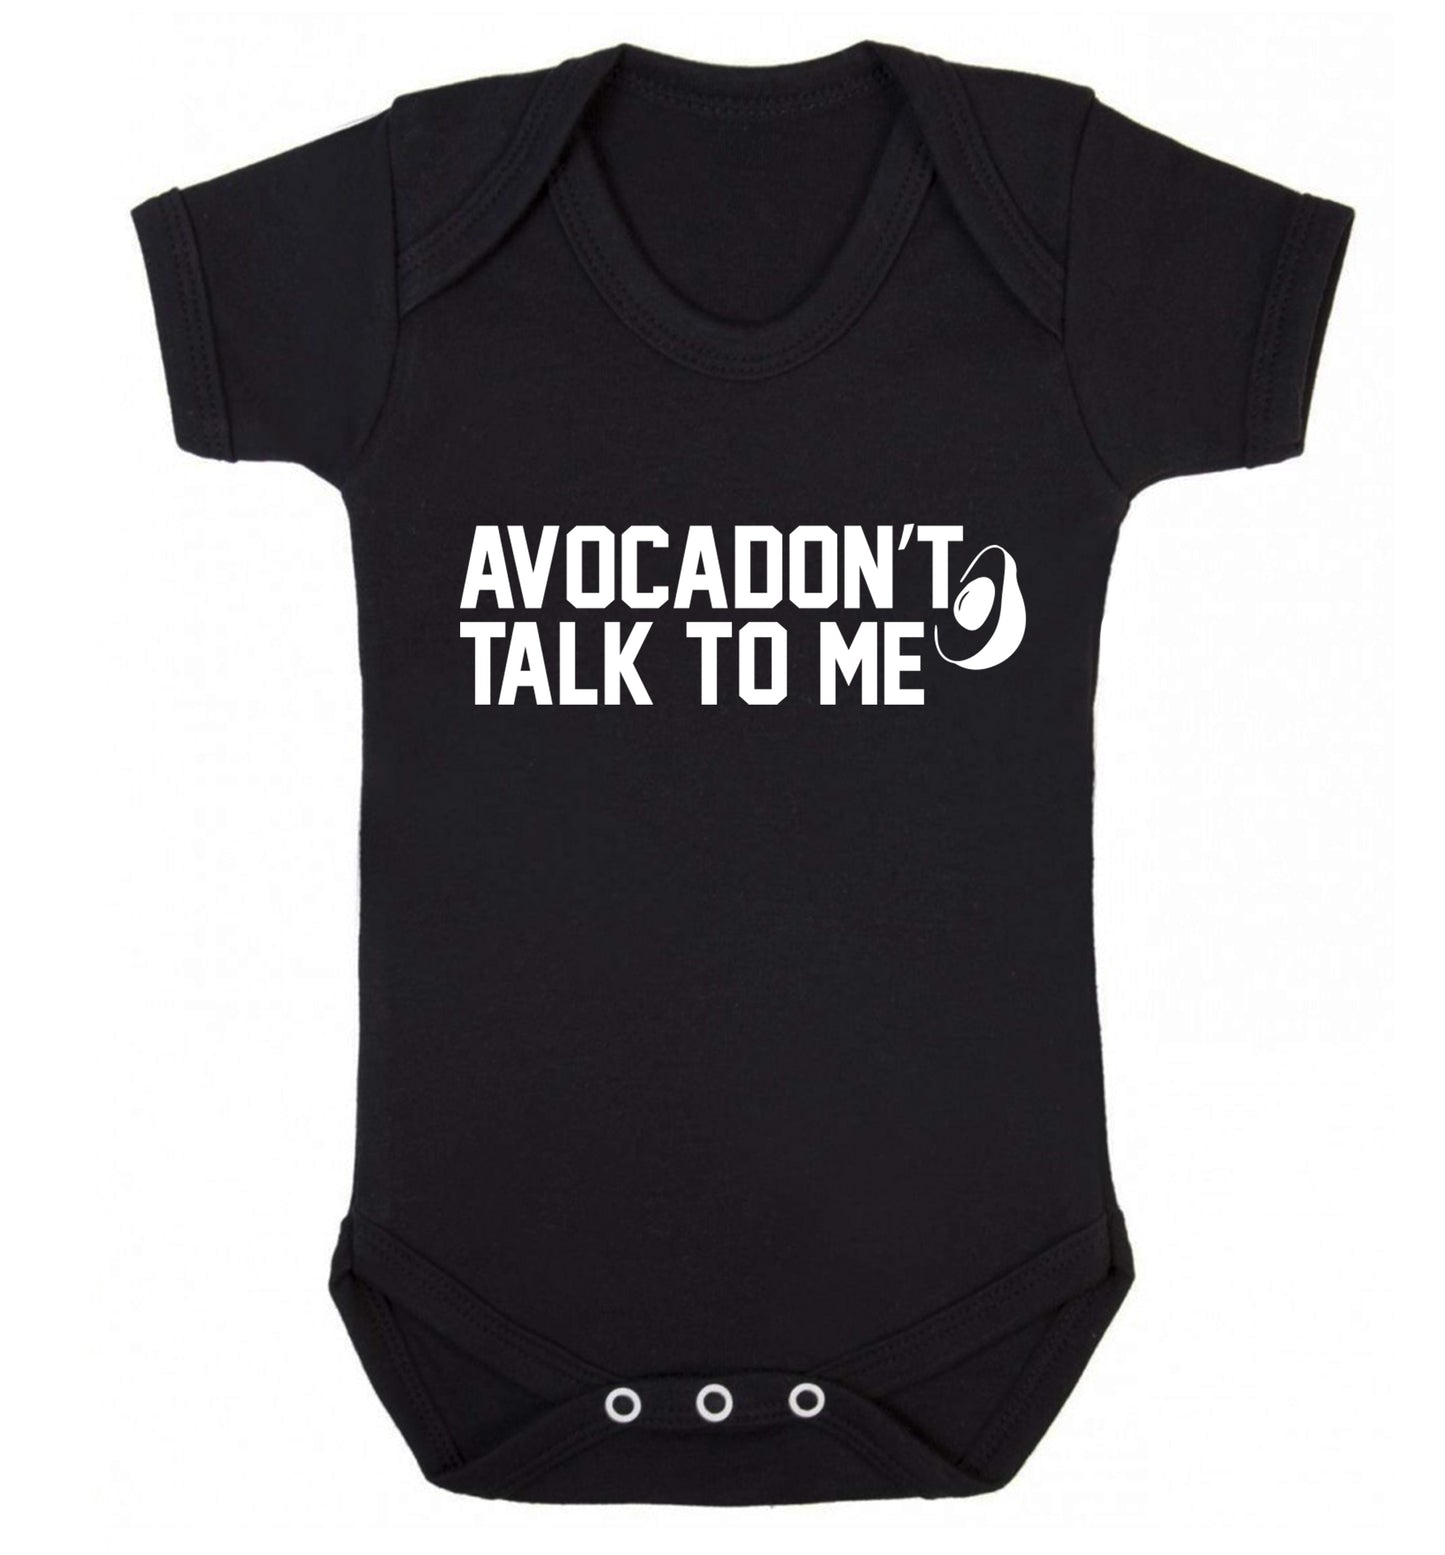 Avocadon't talk to me Baby Vest black 18-24 months